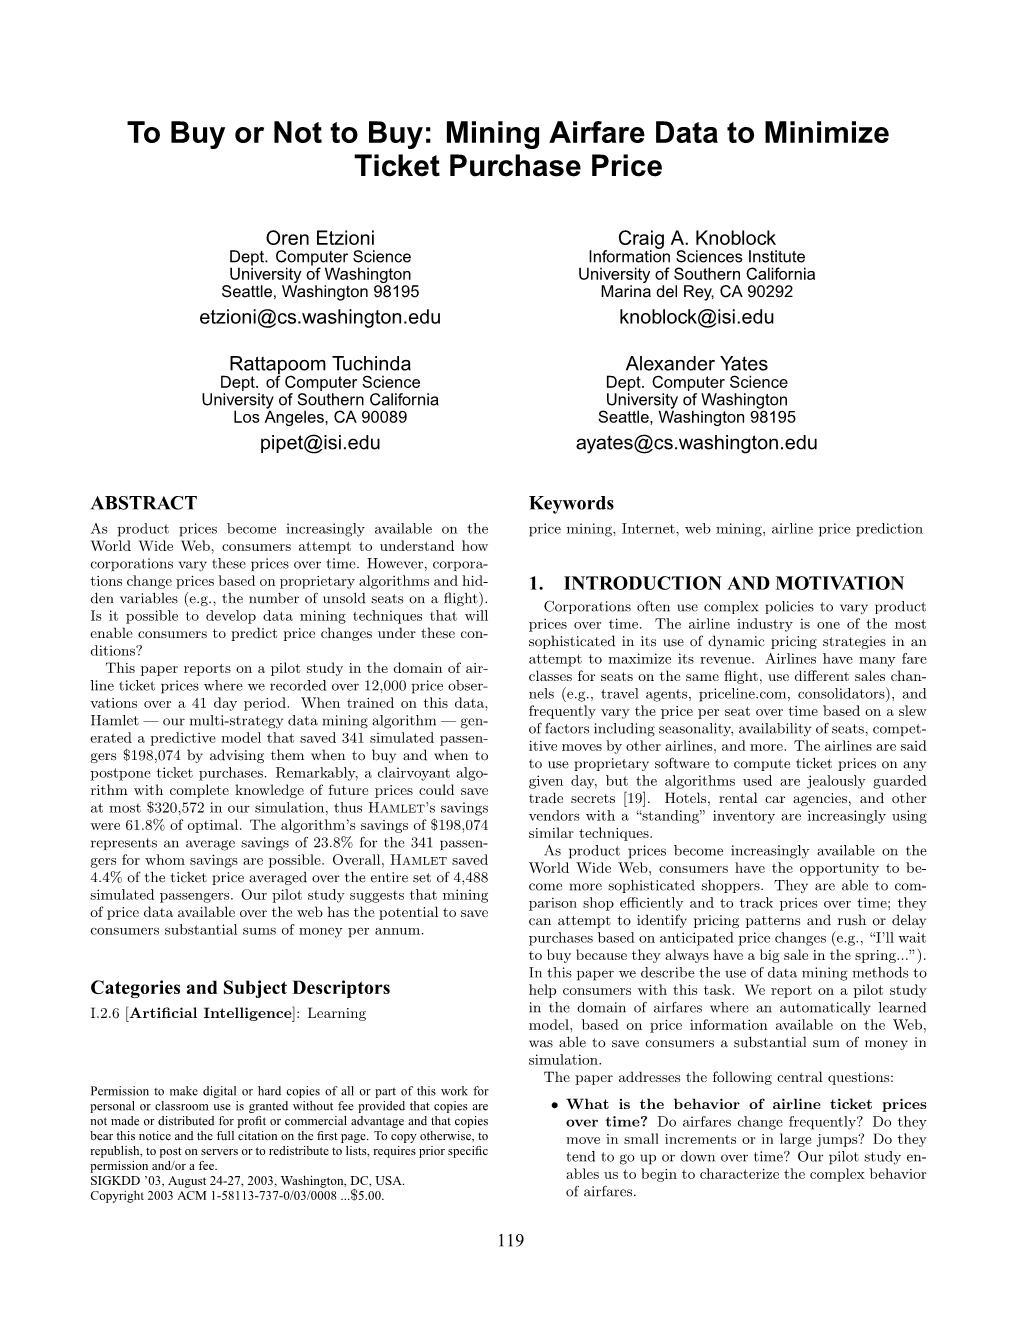 Mining Airfare Data to Minimize Ticket Purchase Price